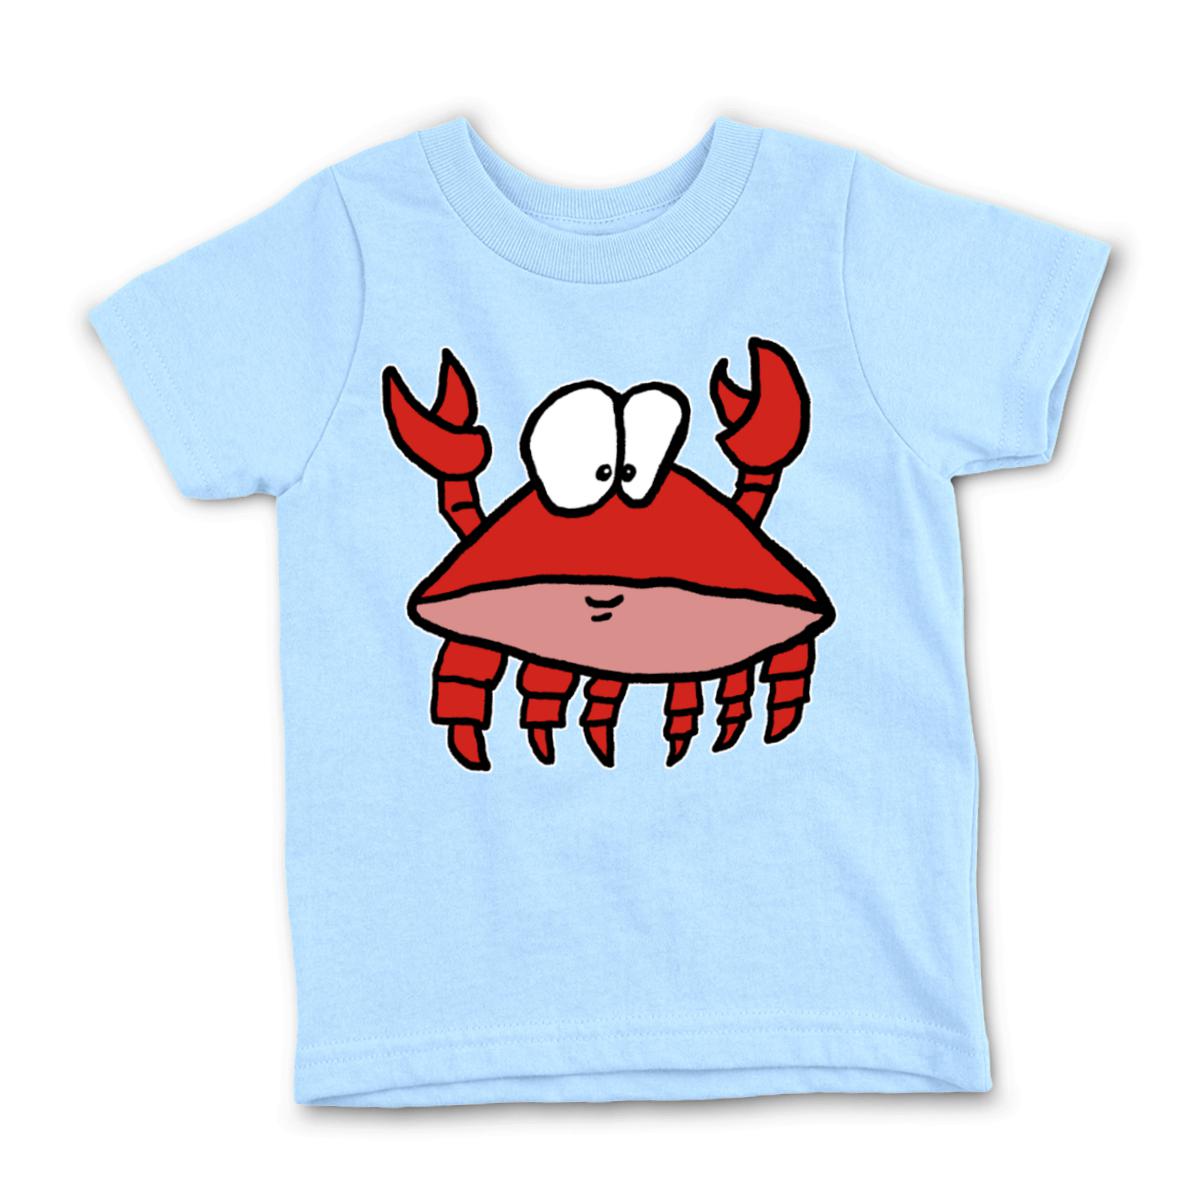 Crab 2.0 Kid's Tee Small light-blue